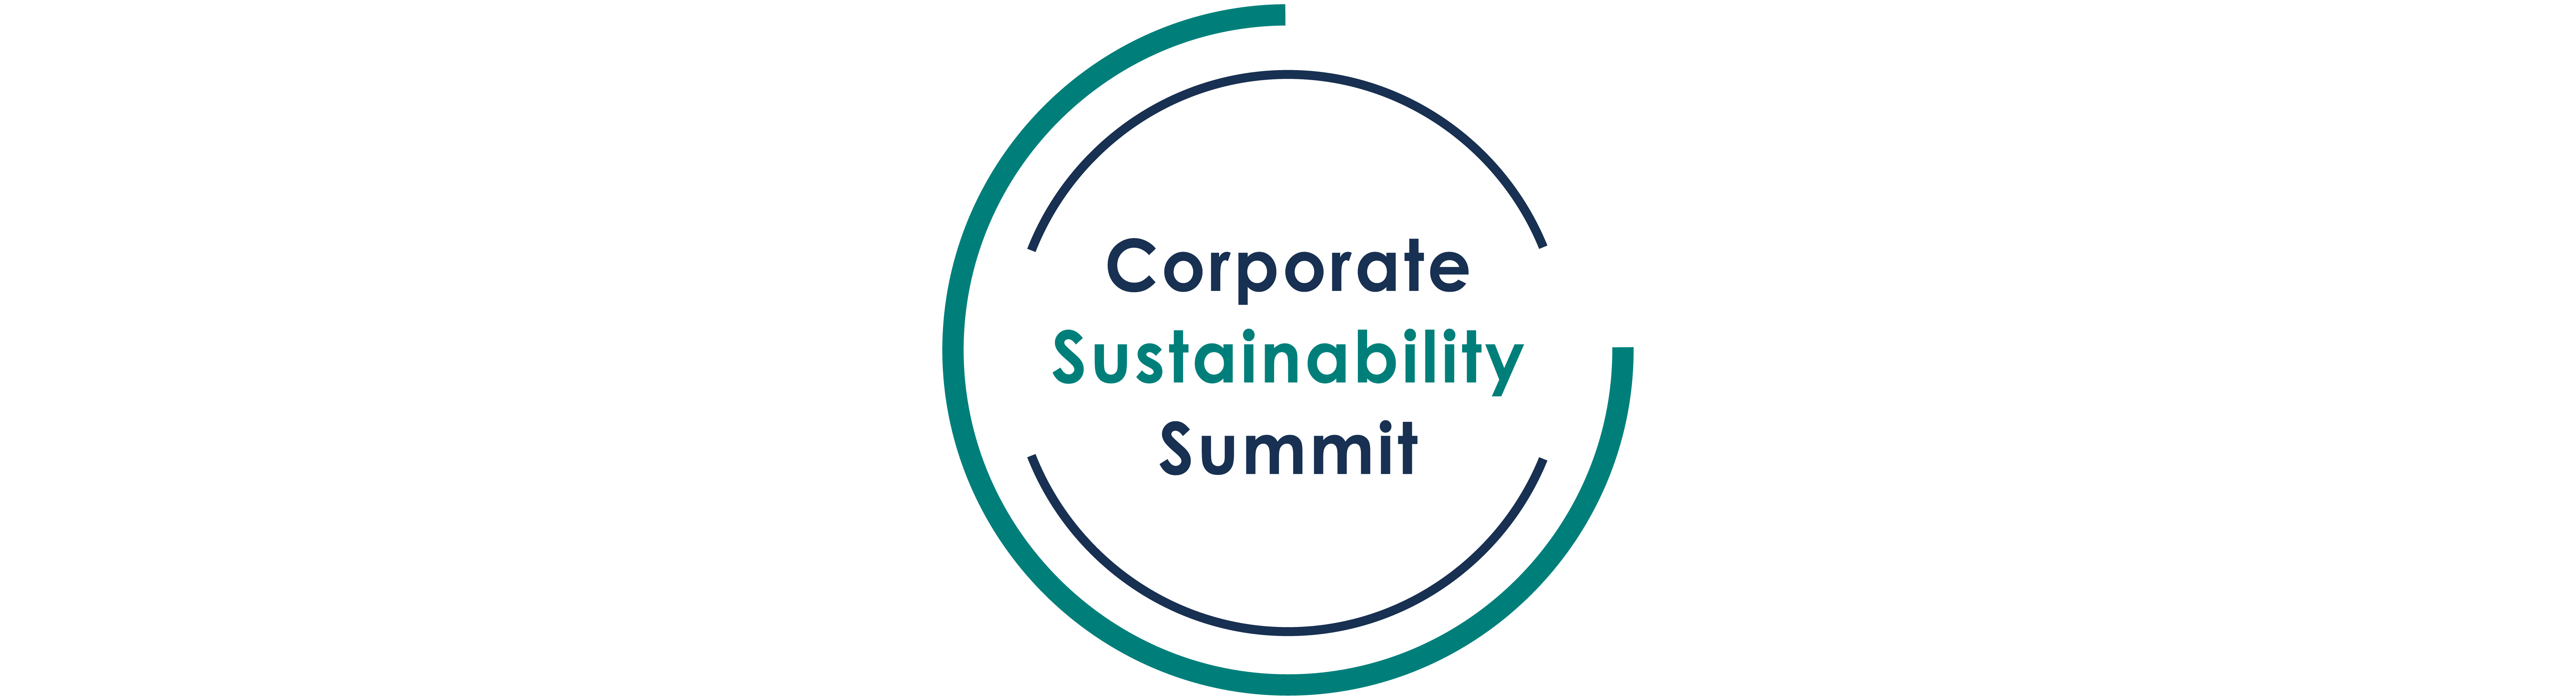 Corporate Sustainability Summit logo